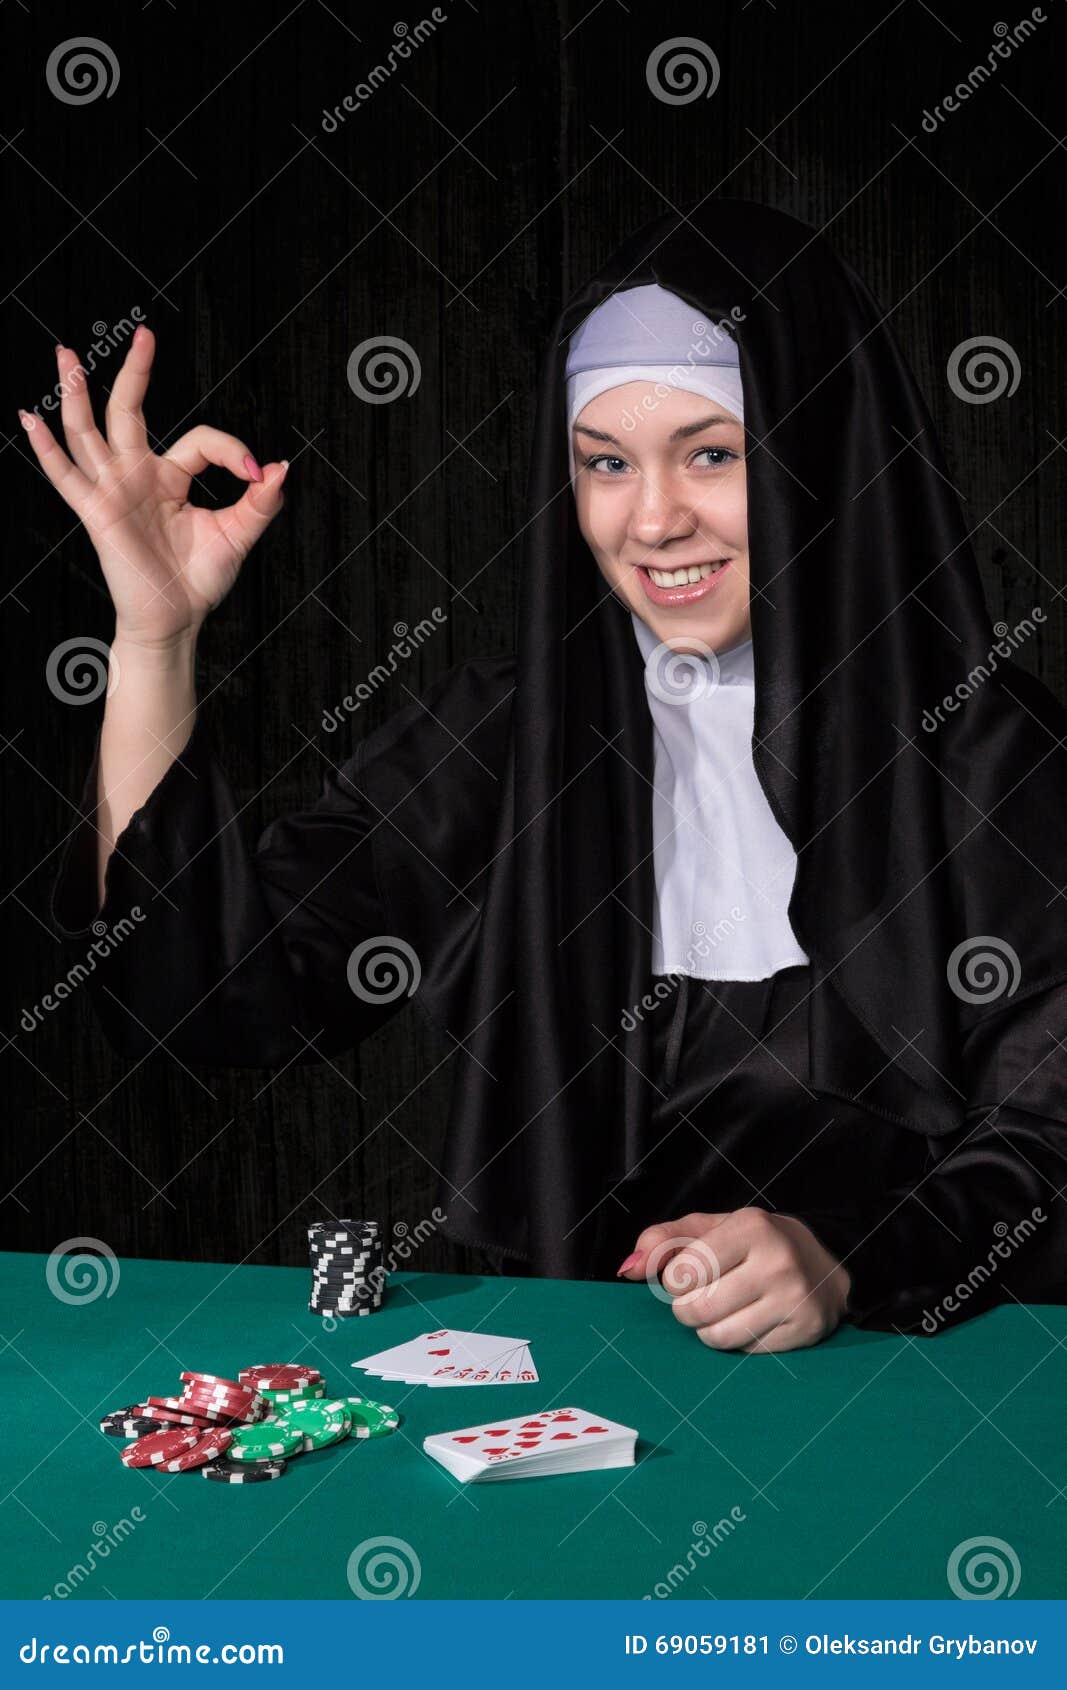 Nun shows sign ok stock image. Image of devotion, adult - 69059181